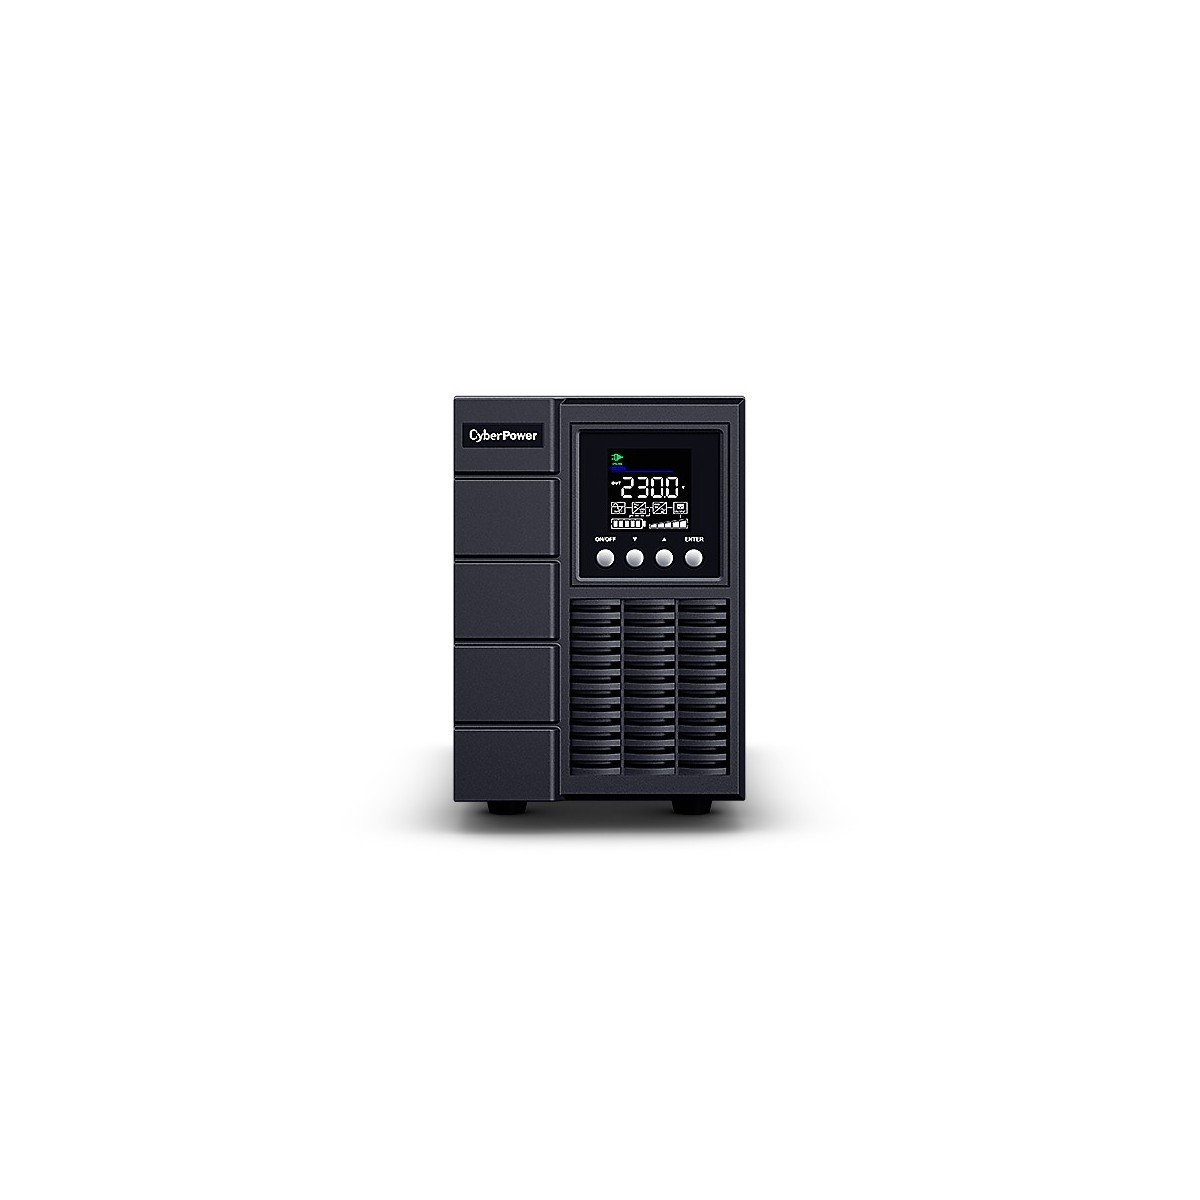 CyberPower Systems CyberPower USV OLS1500EA-DE Tower 1500VA/1350W - (Offline) UPS - Power Saving Mode